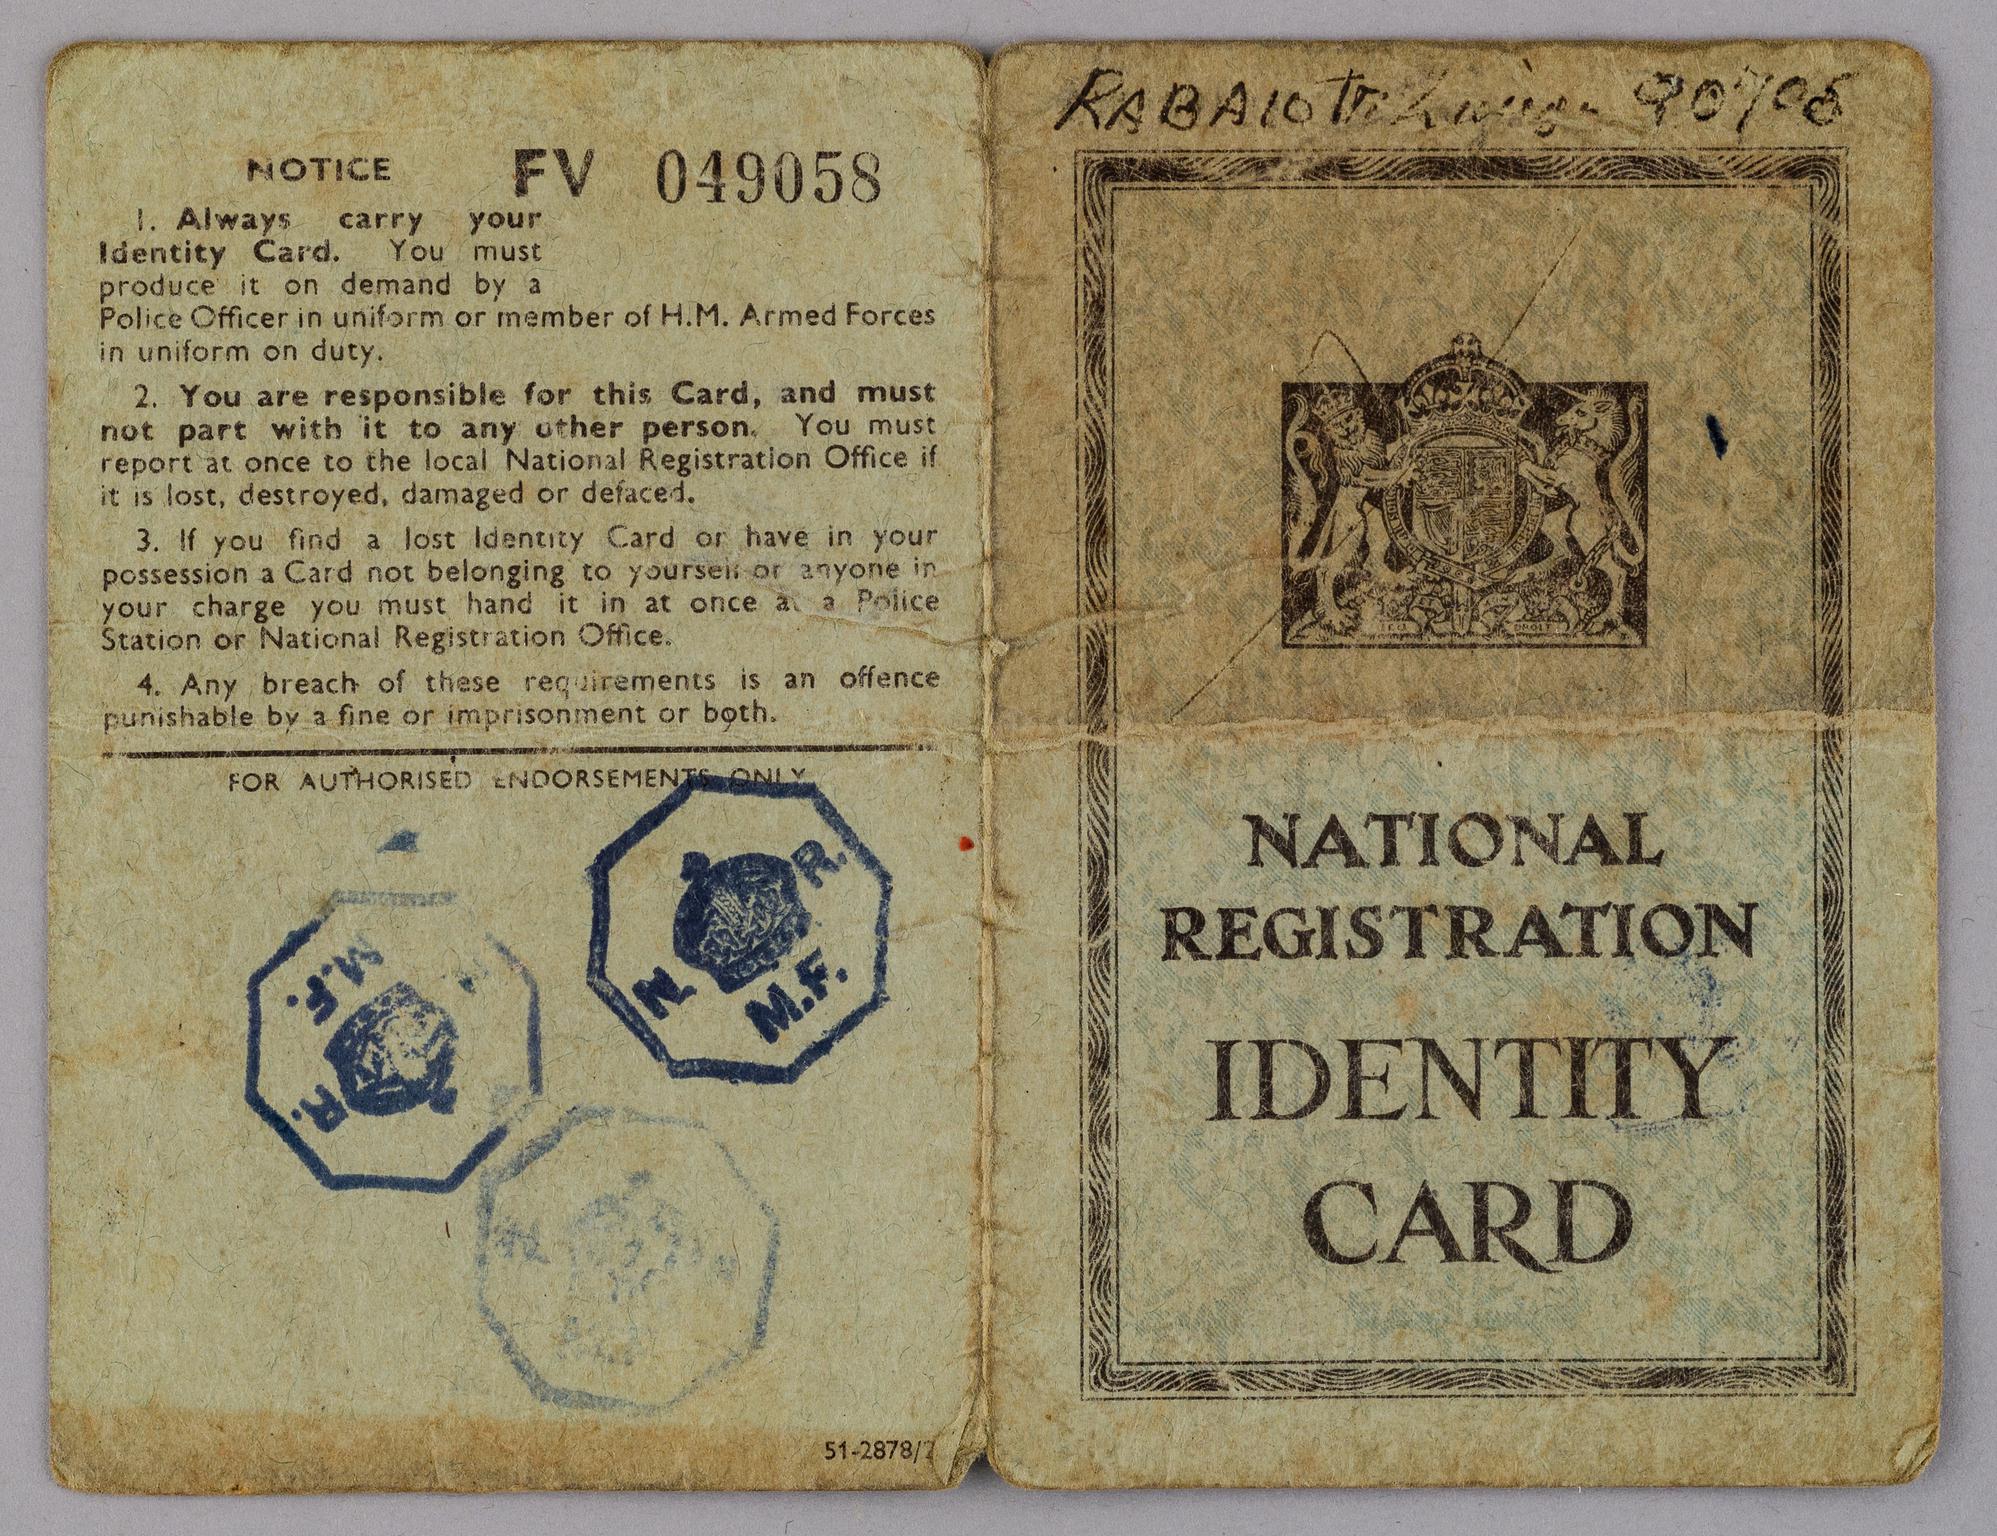 Identity card